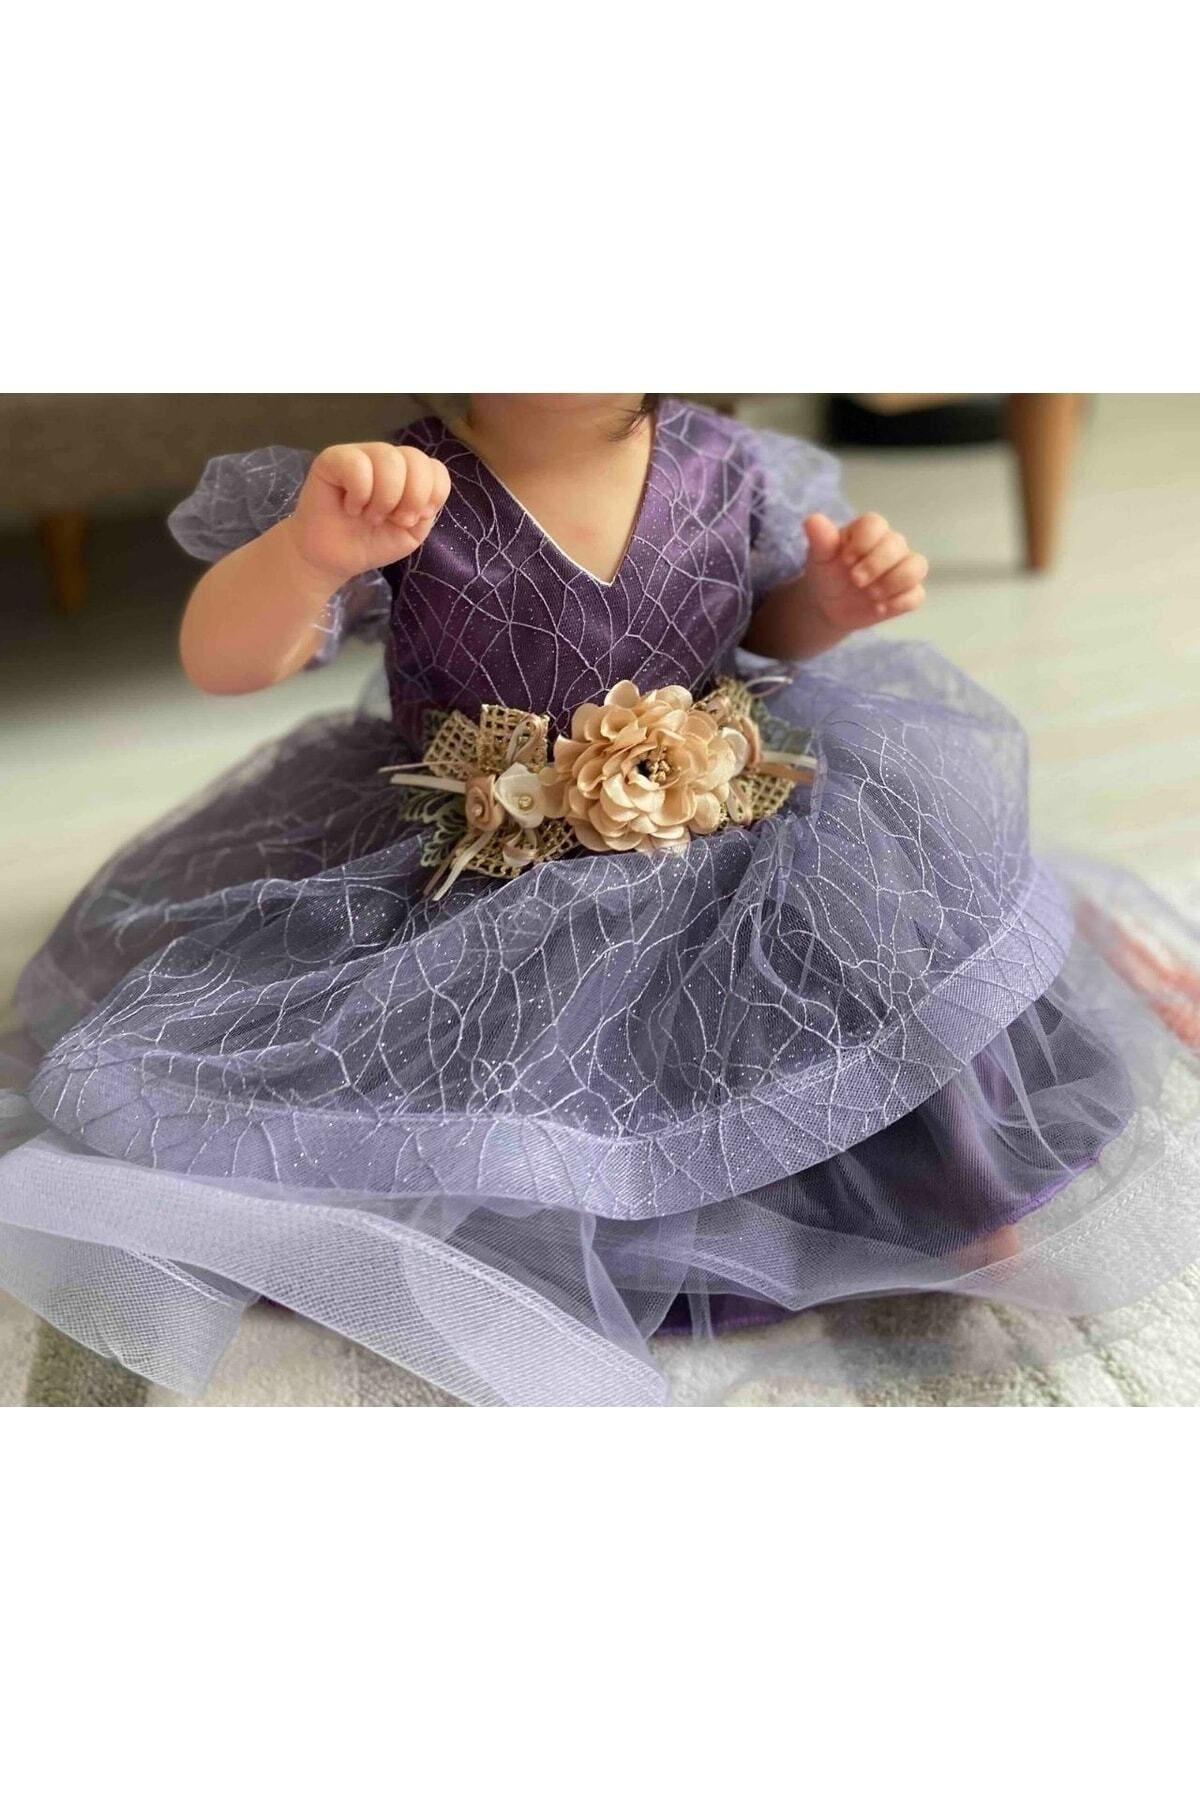 Cherub Baby Petite Ponpon Baby Premium Kız Bebek Mevlüt Elbisesi 368premium